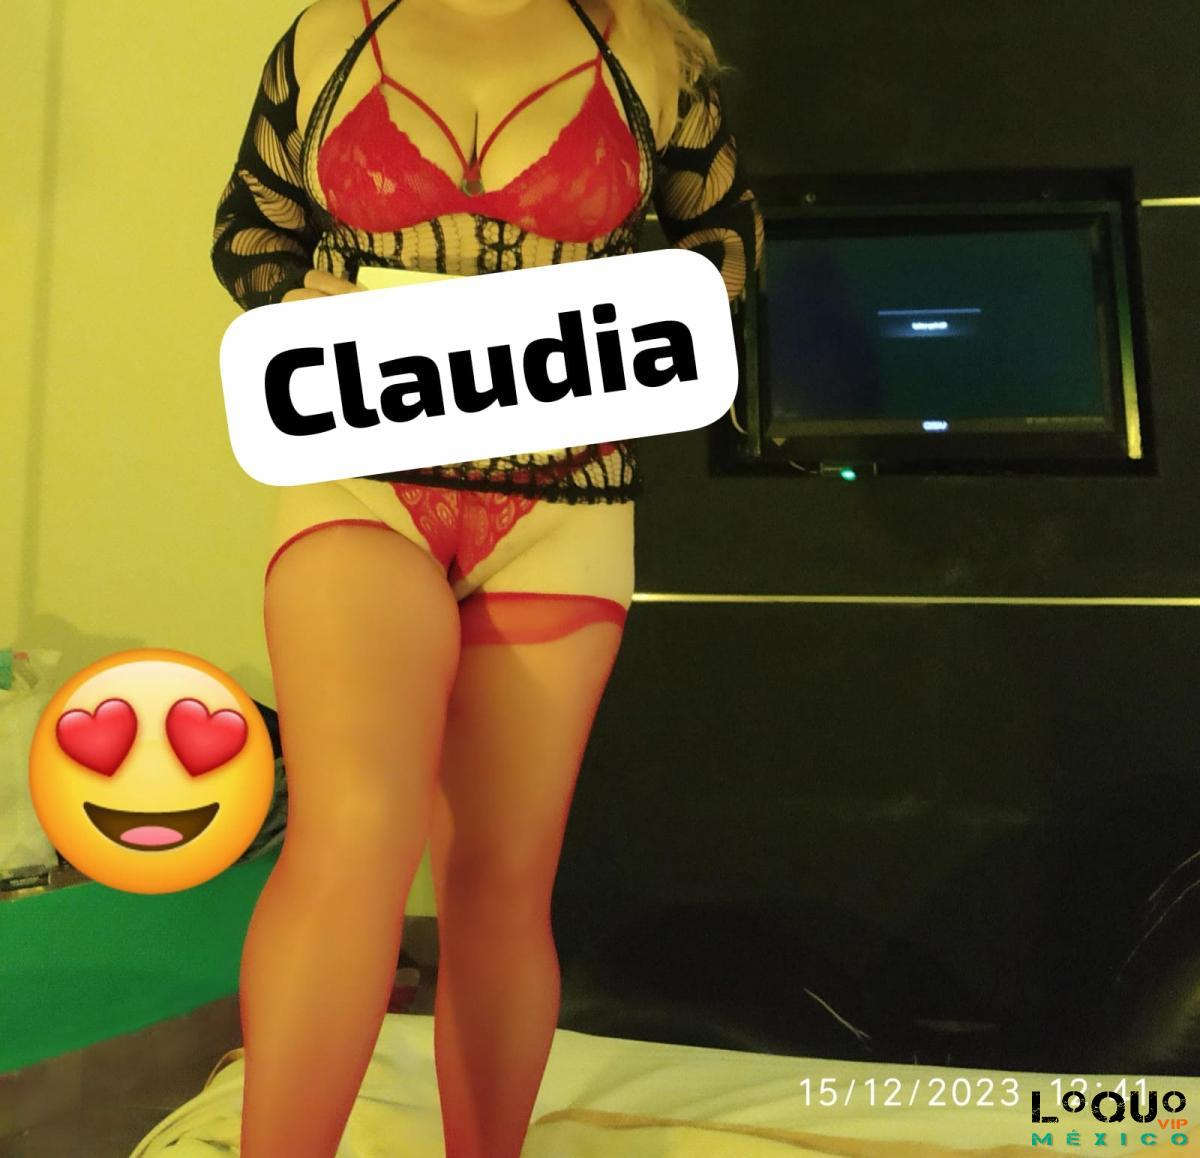 Putas Veracruz: B Claudia madurita adicta al sexo anal disponible en Coatzacoalcos